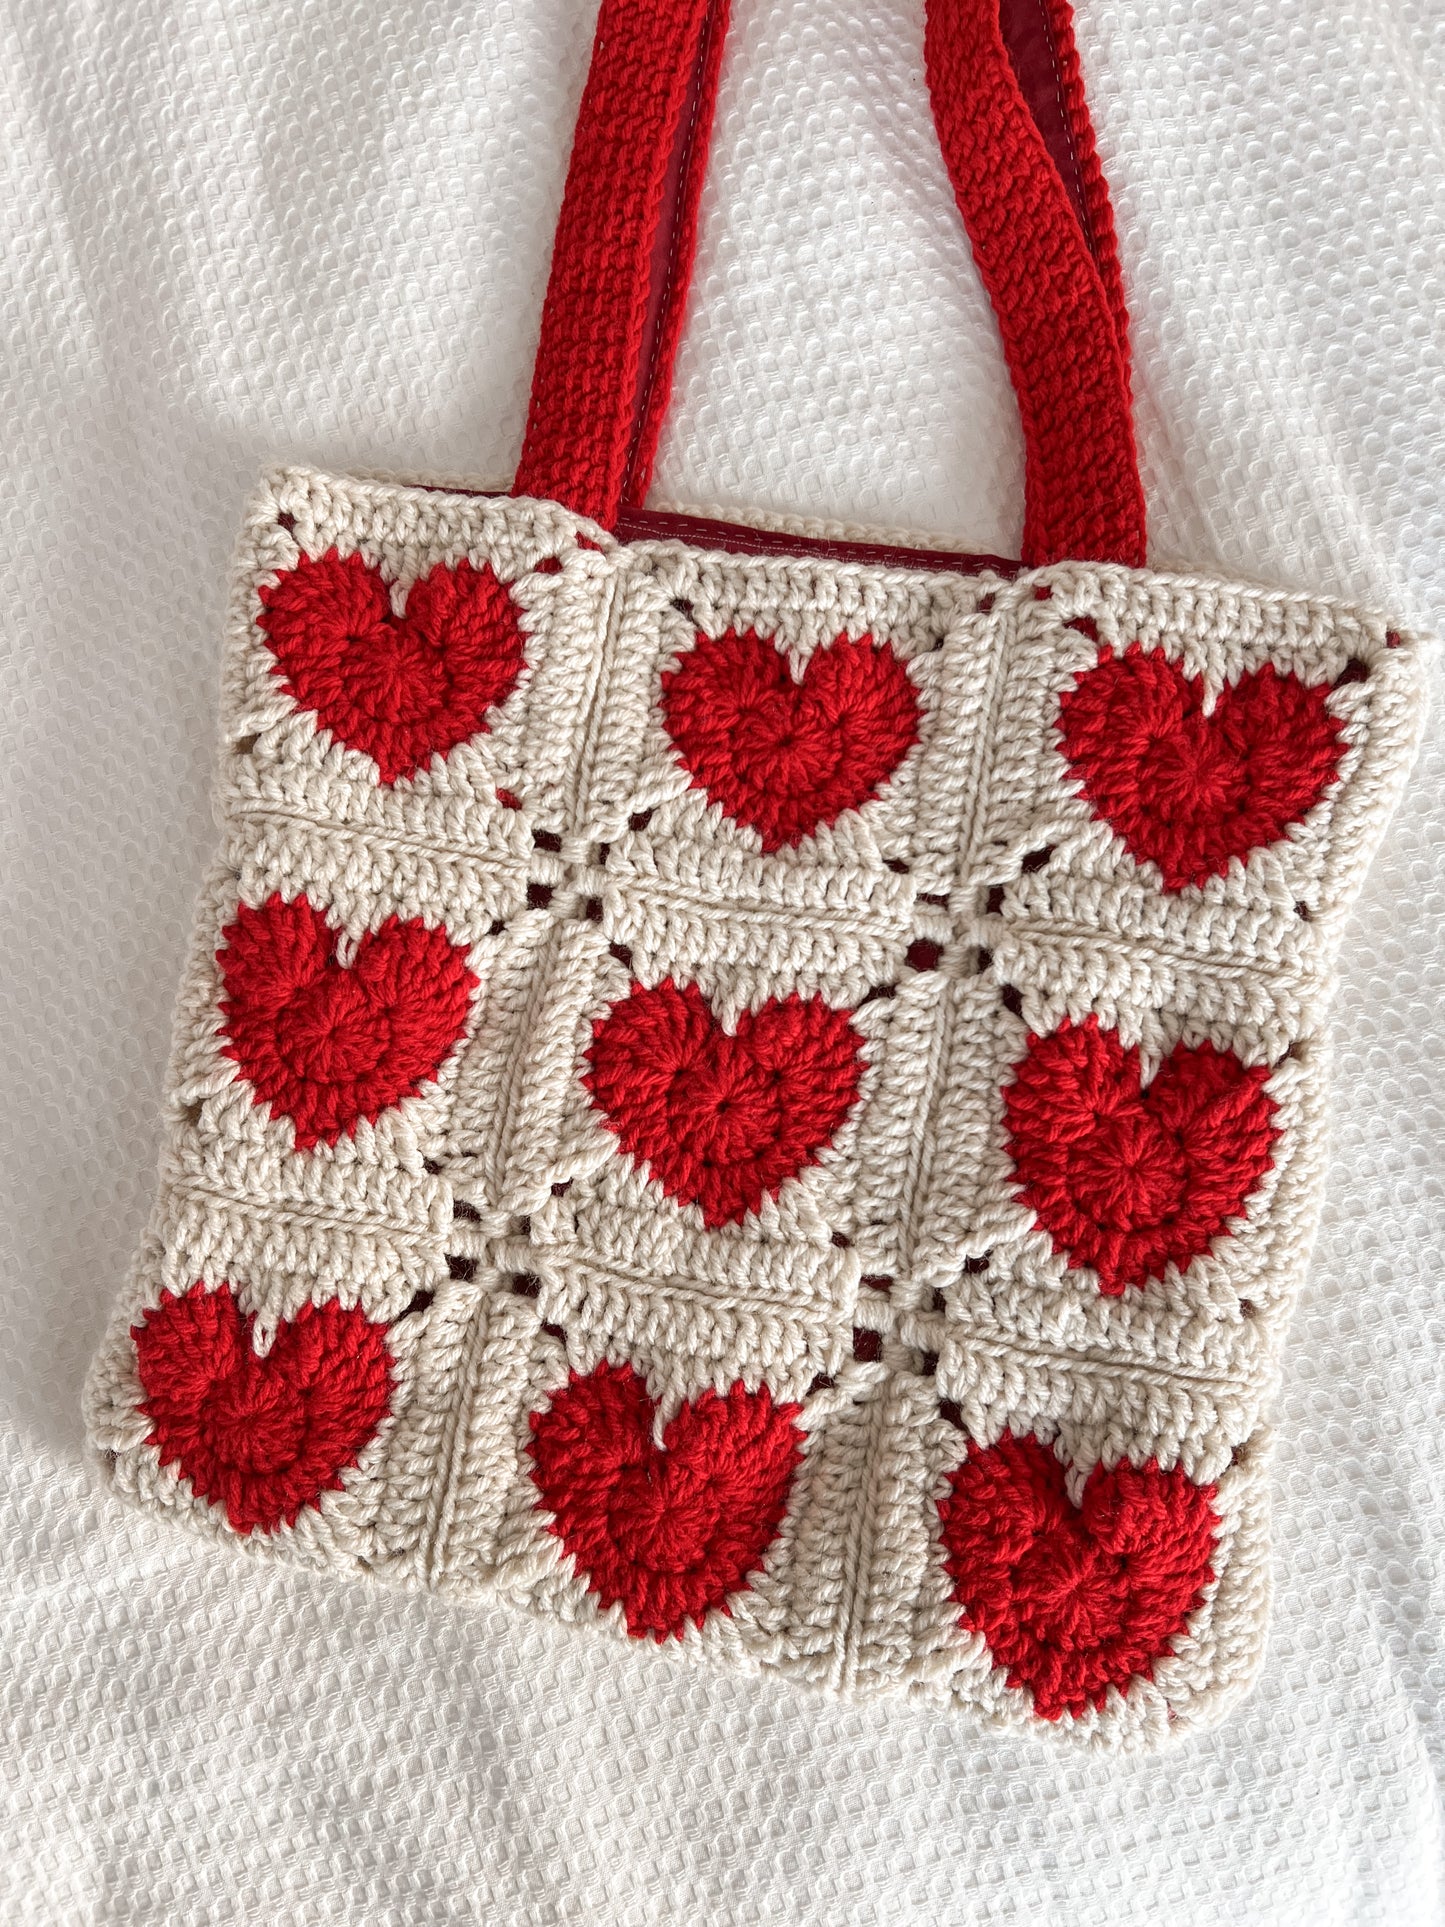 Red Hearts Crochet Bag